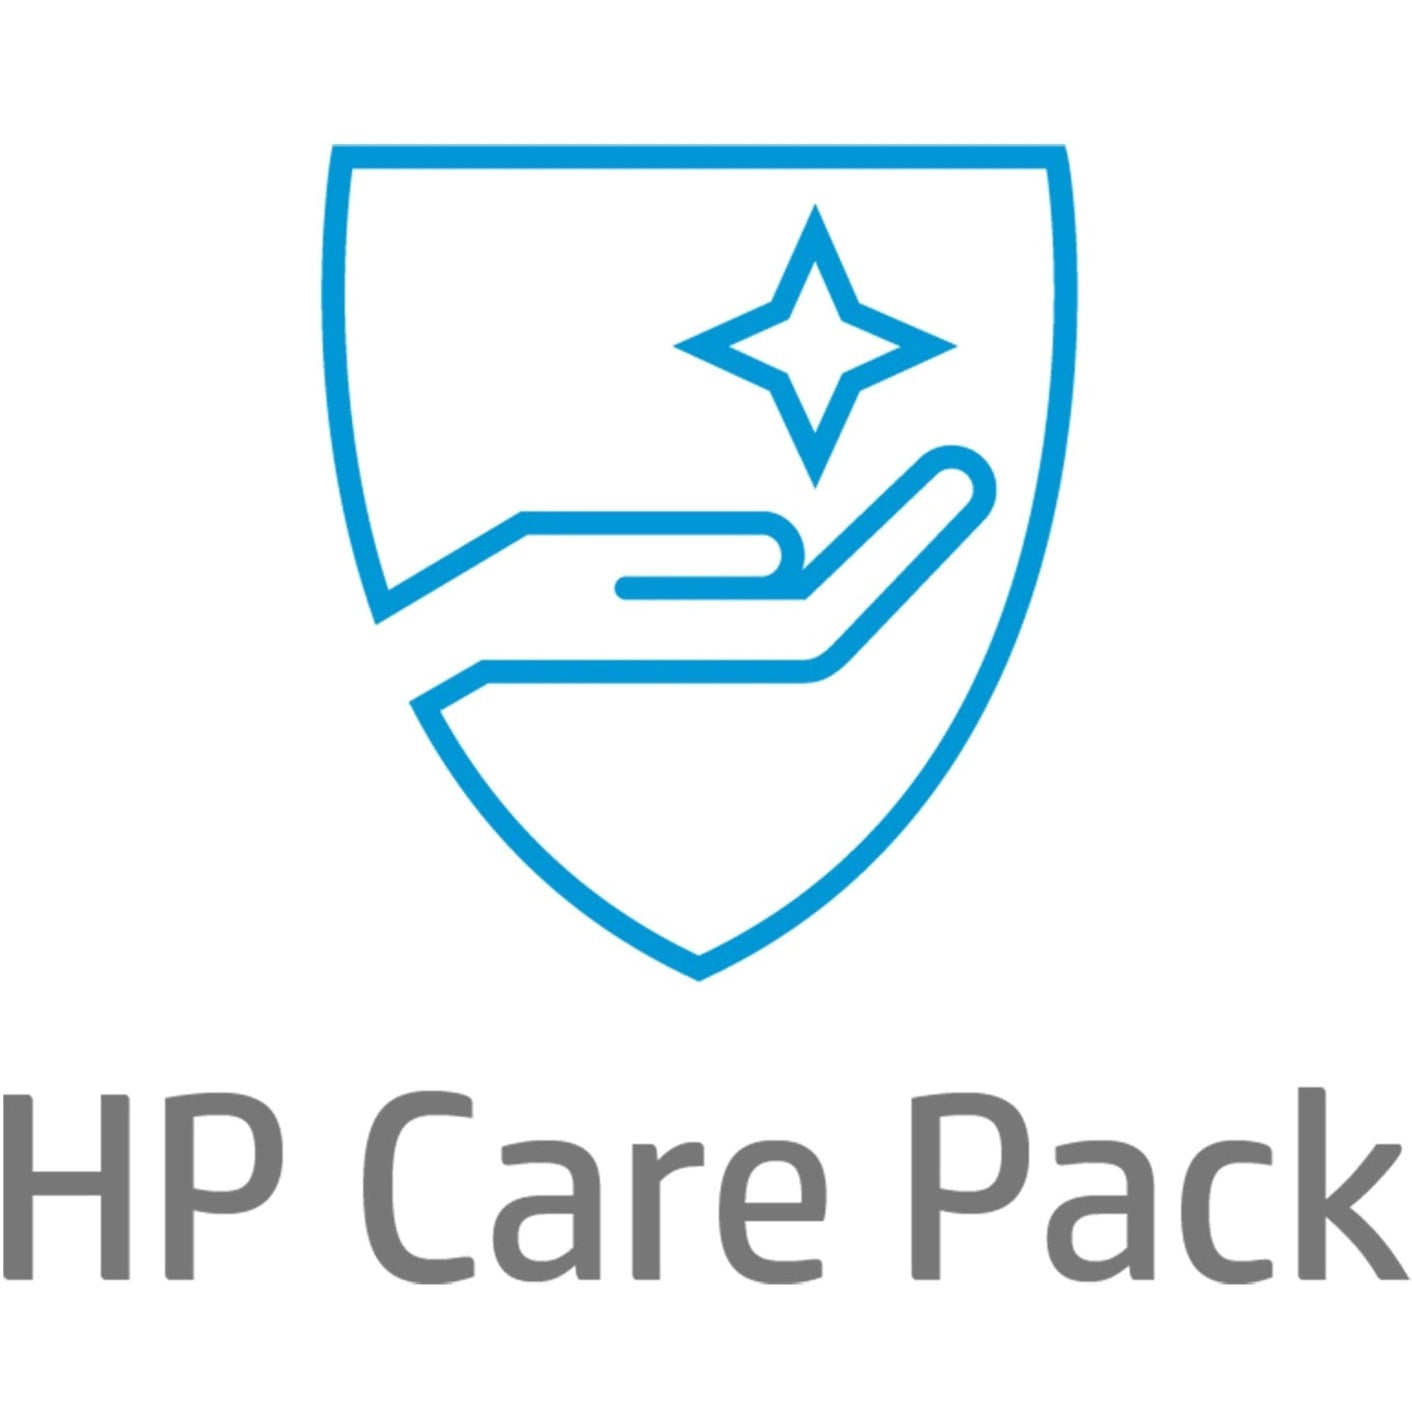 HP Care Pack - 5 Year - Warranty (UL786E)